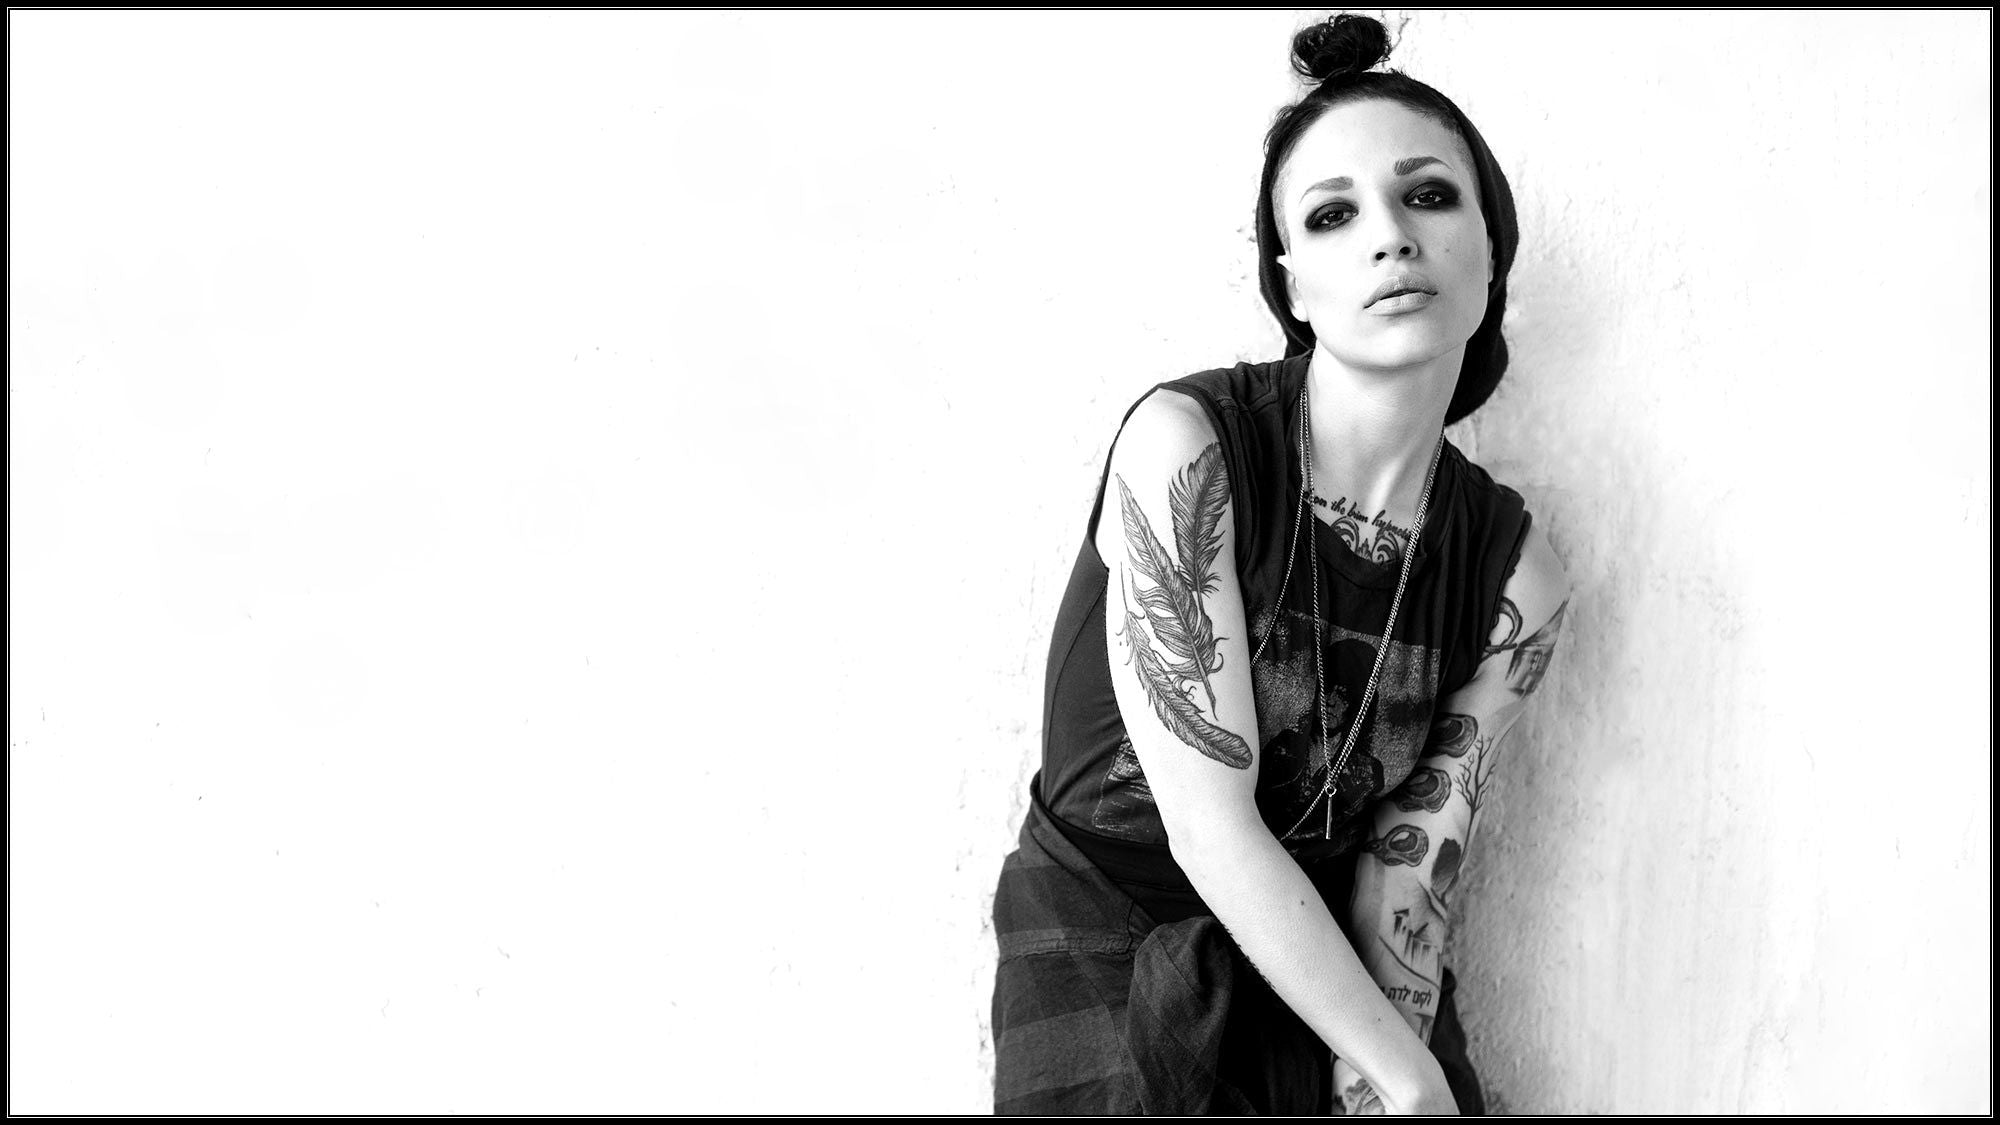 tattooed girl in tank top grunge style look - shop blackcloth